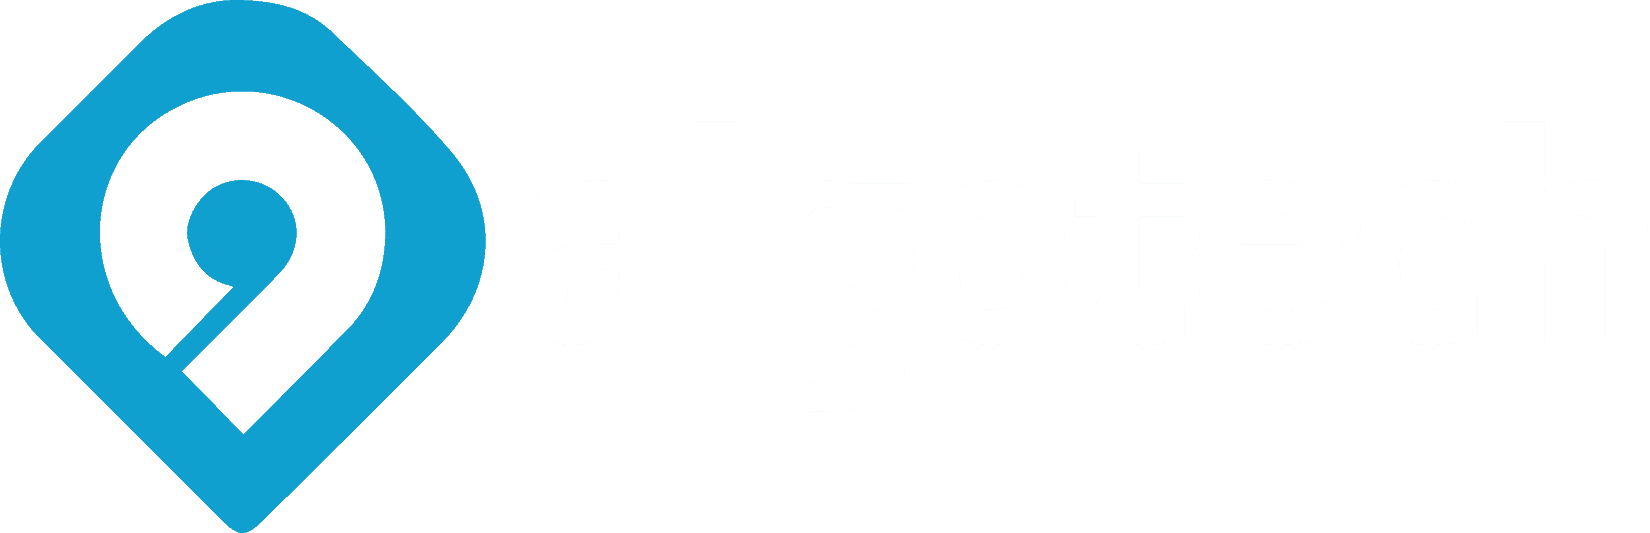 Algotech logo - white